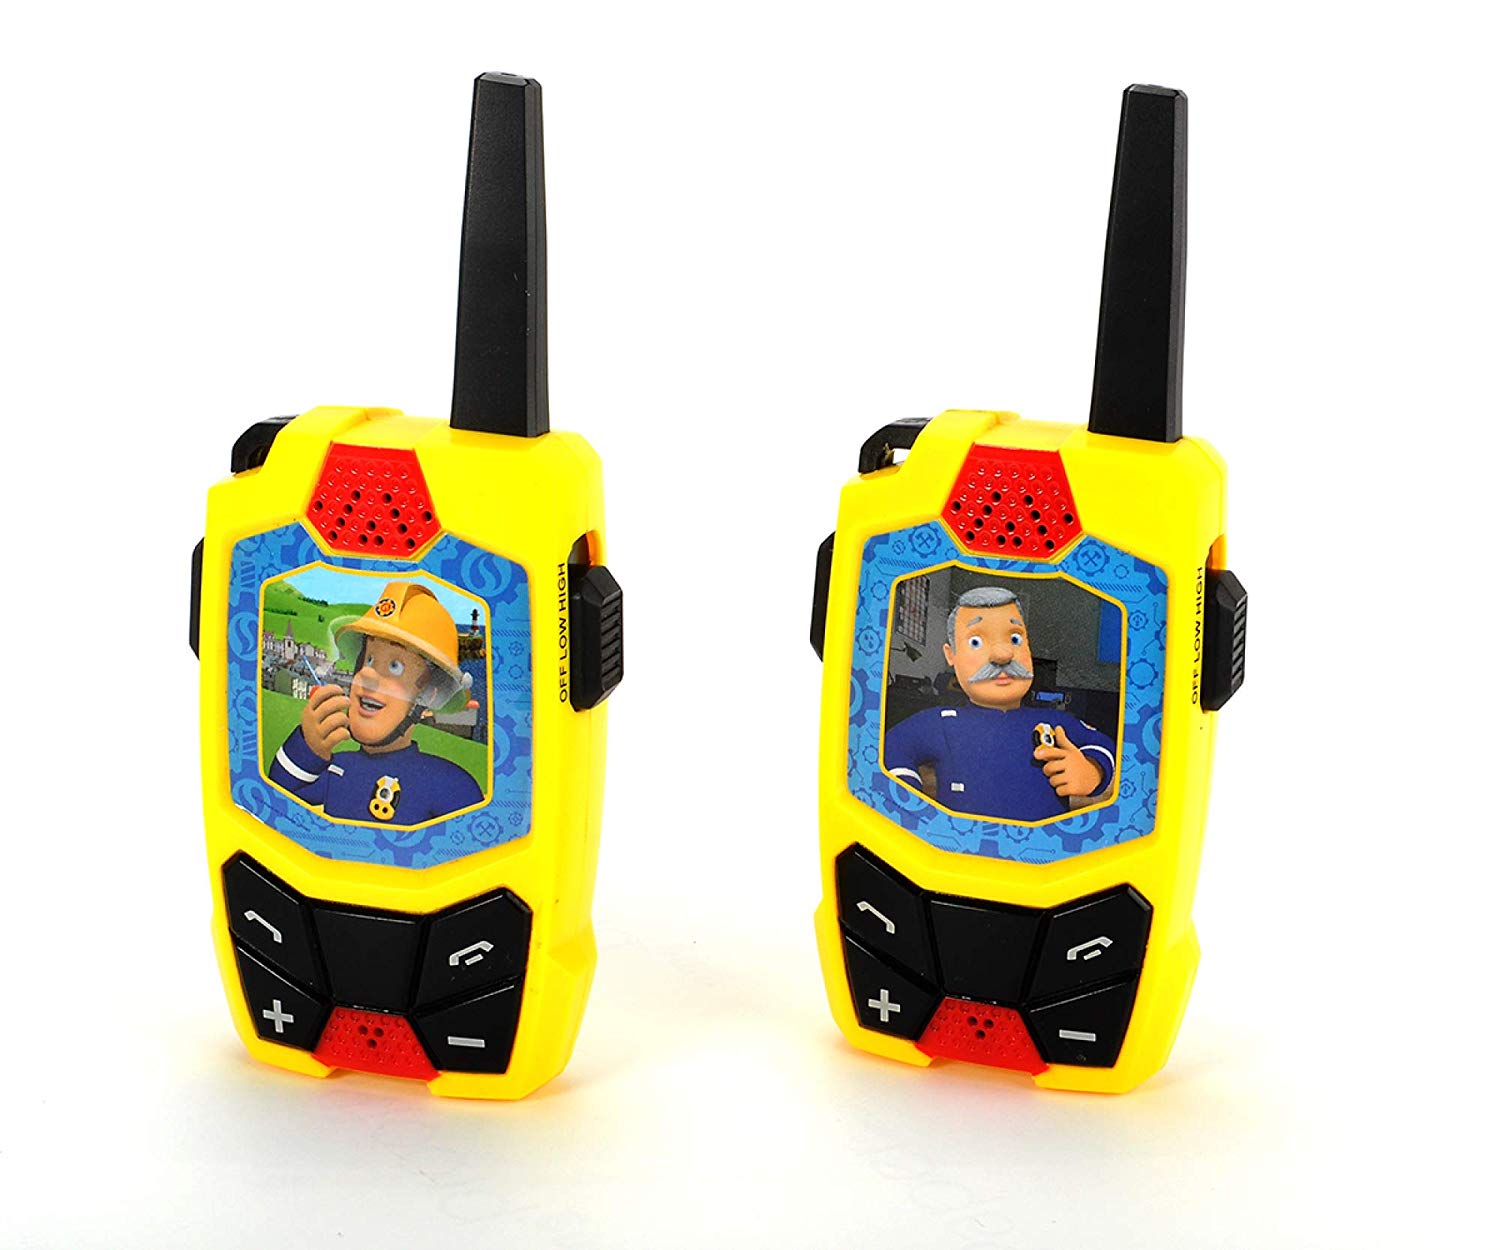 Dickie Toys Wild Toys 203092001 Fireman Sam Walkie Talkie Radio